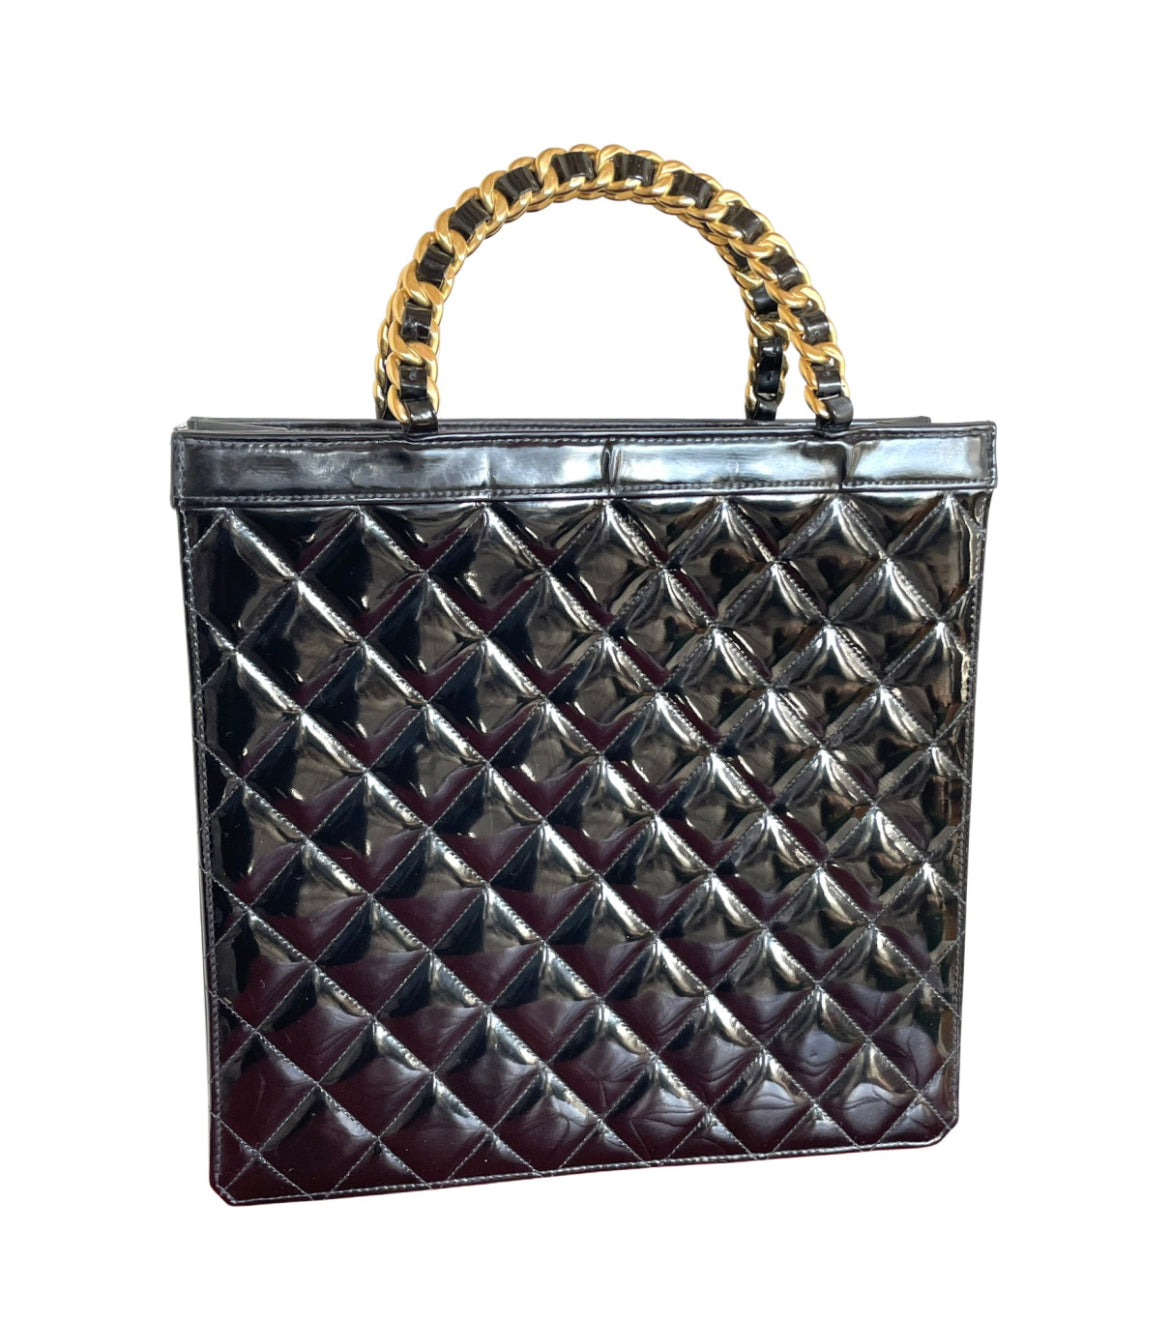 Vintage CHANEL black calfskin shoulder bag, tote bag with golden chain –  eNdApPi ***where you can find your favorite designer  vintages..authentic, affordable, and lovable.